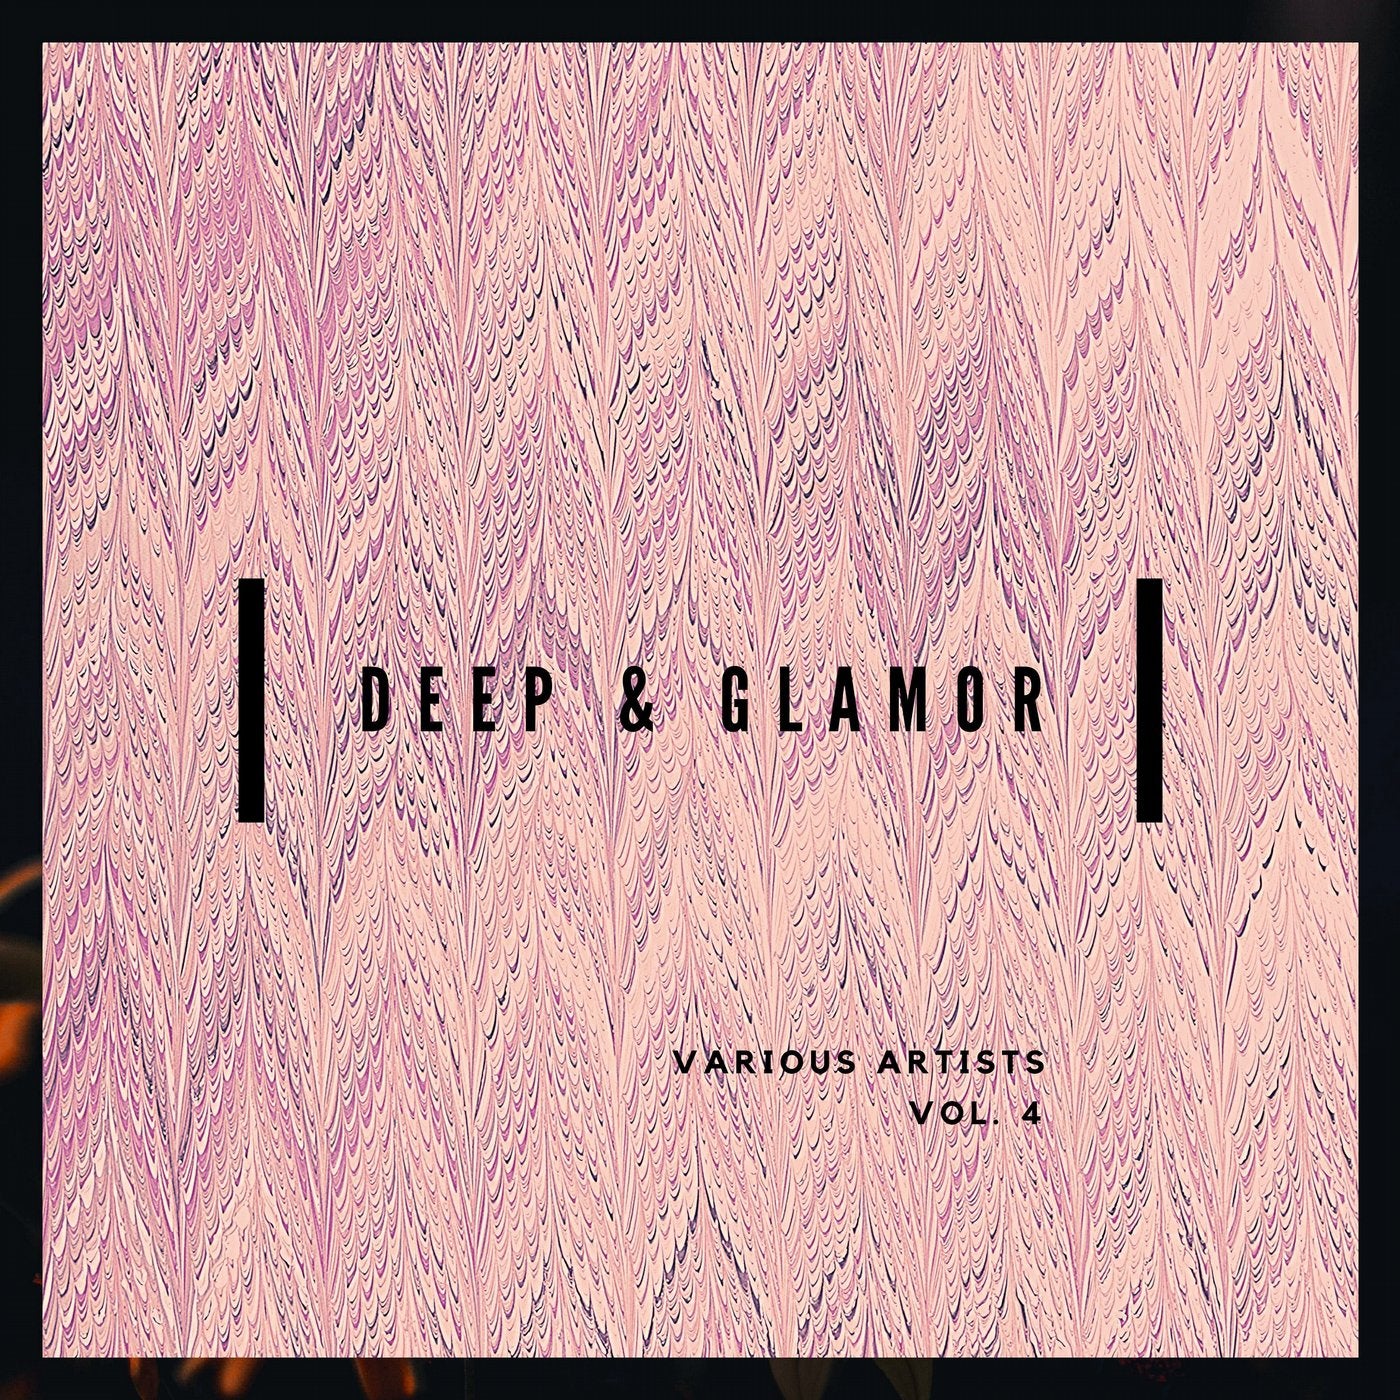 Deep & Glamor, Vol. 4